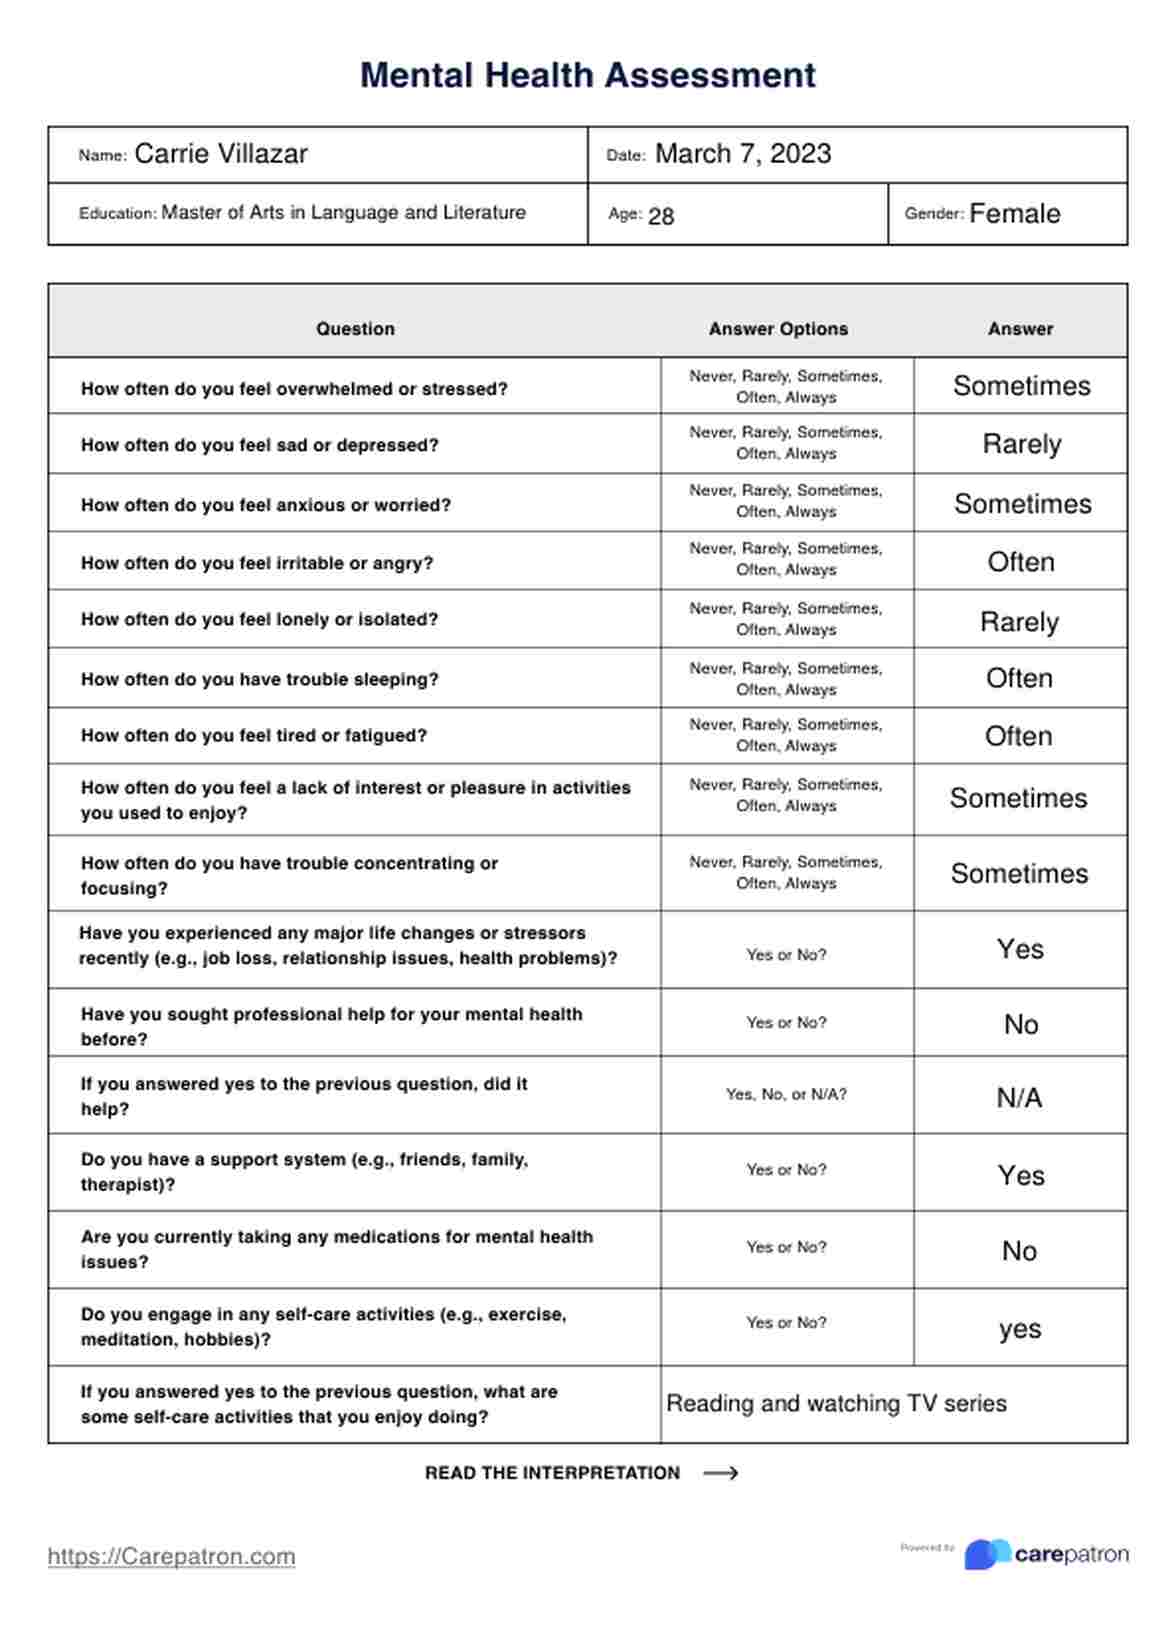 Mental Health Assessment PDF Example